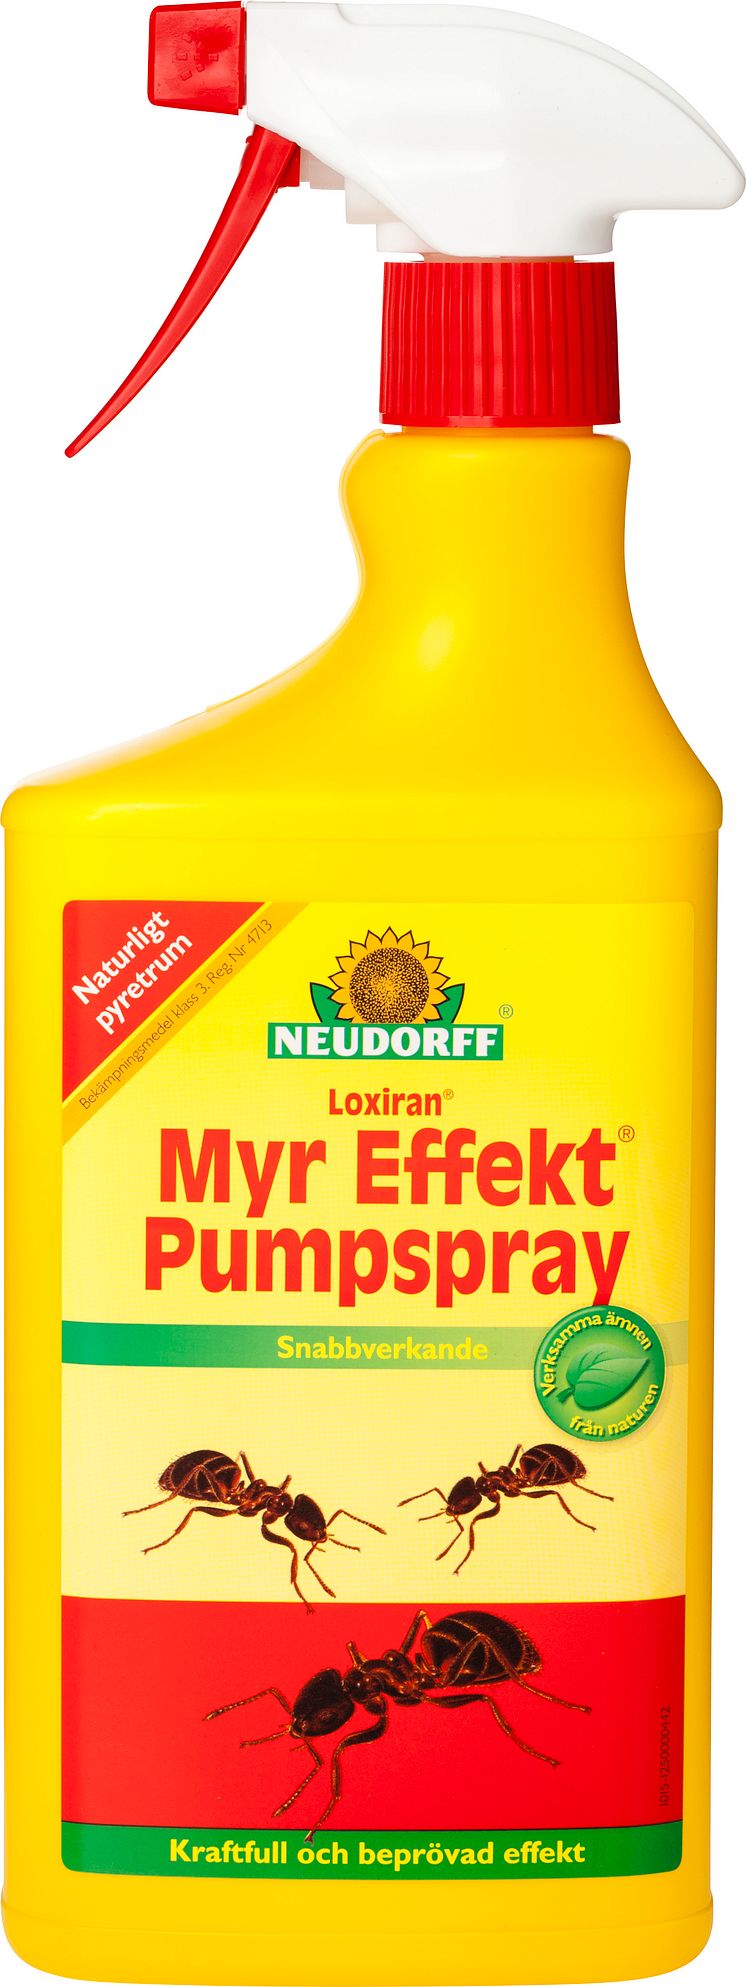 Myr Effekt Pumpspray - Neudorff